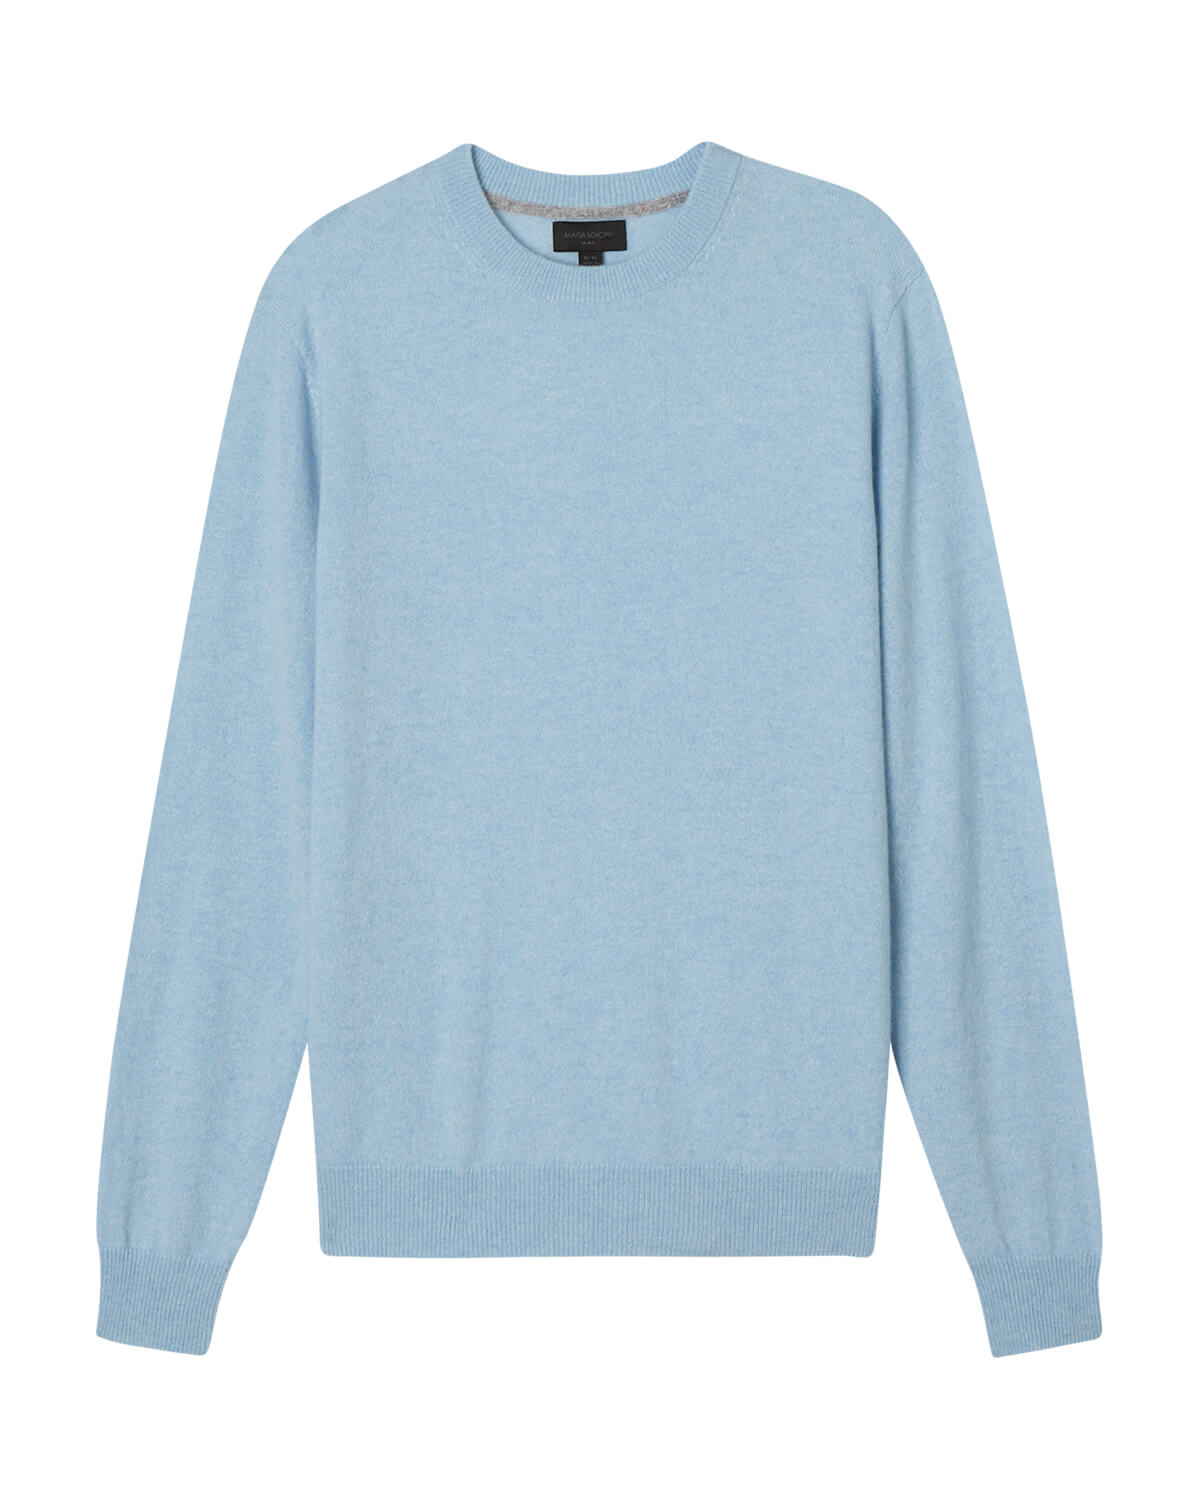 Shop Men's Cashmere Rib Trim Crew Neck Sweater | Magaschoni Men | JANE + MERCER